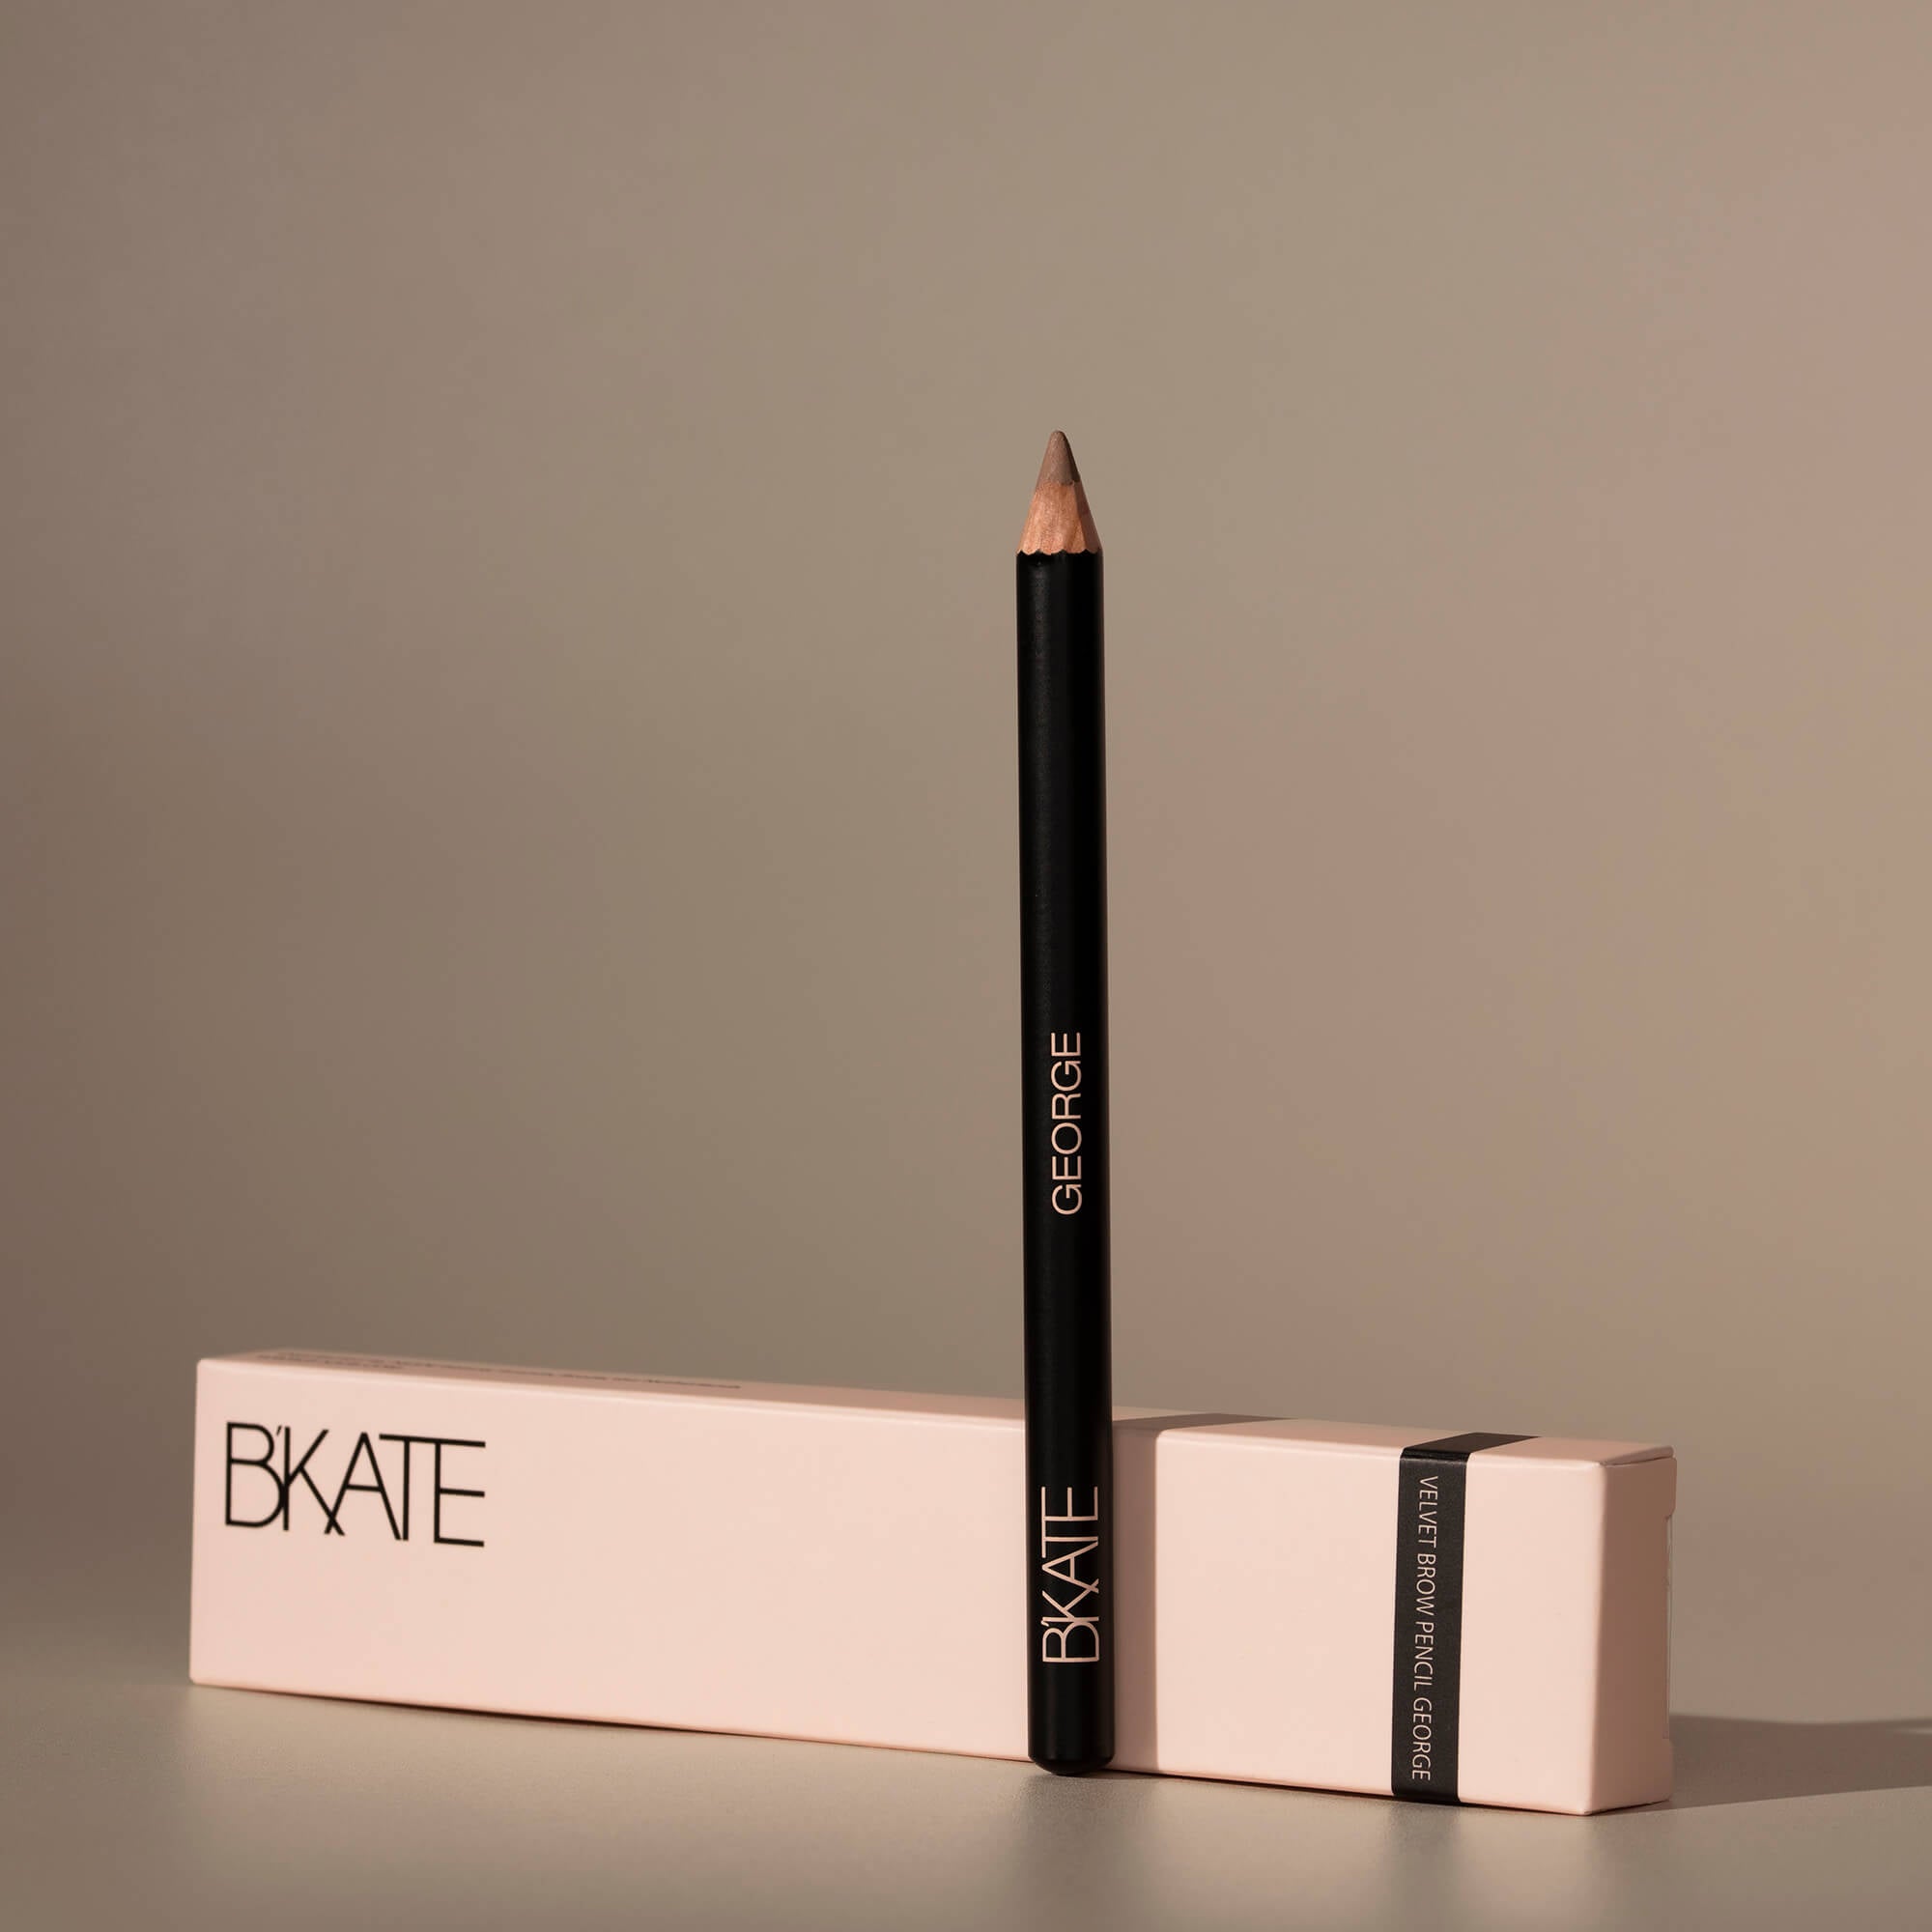 B'KATE Velvet Brow Pencil (natürlicher Look)